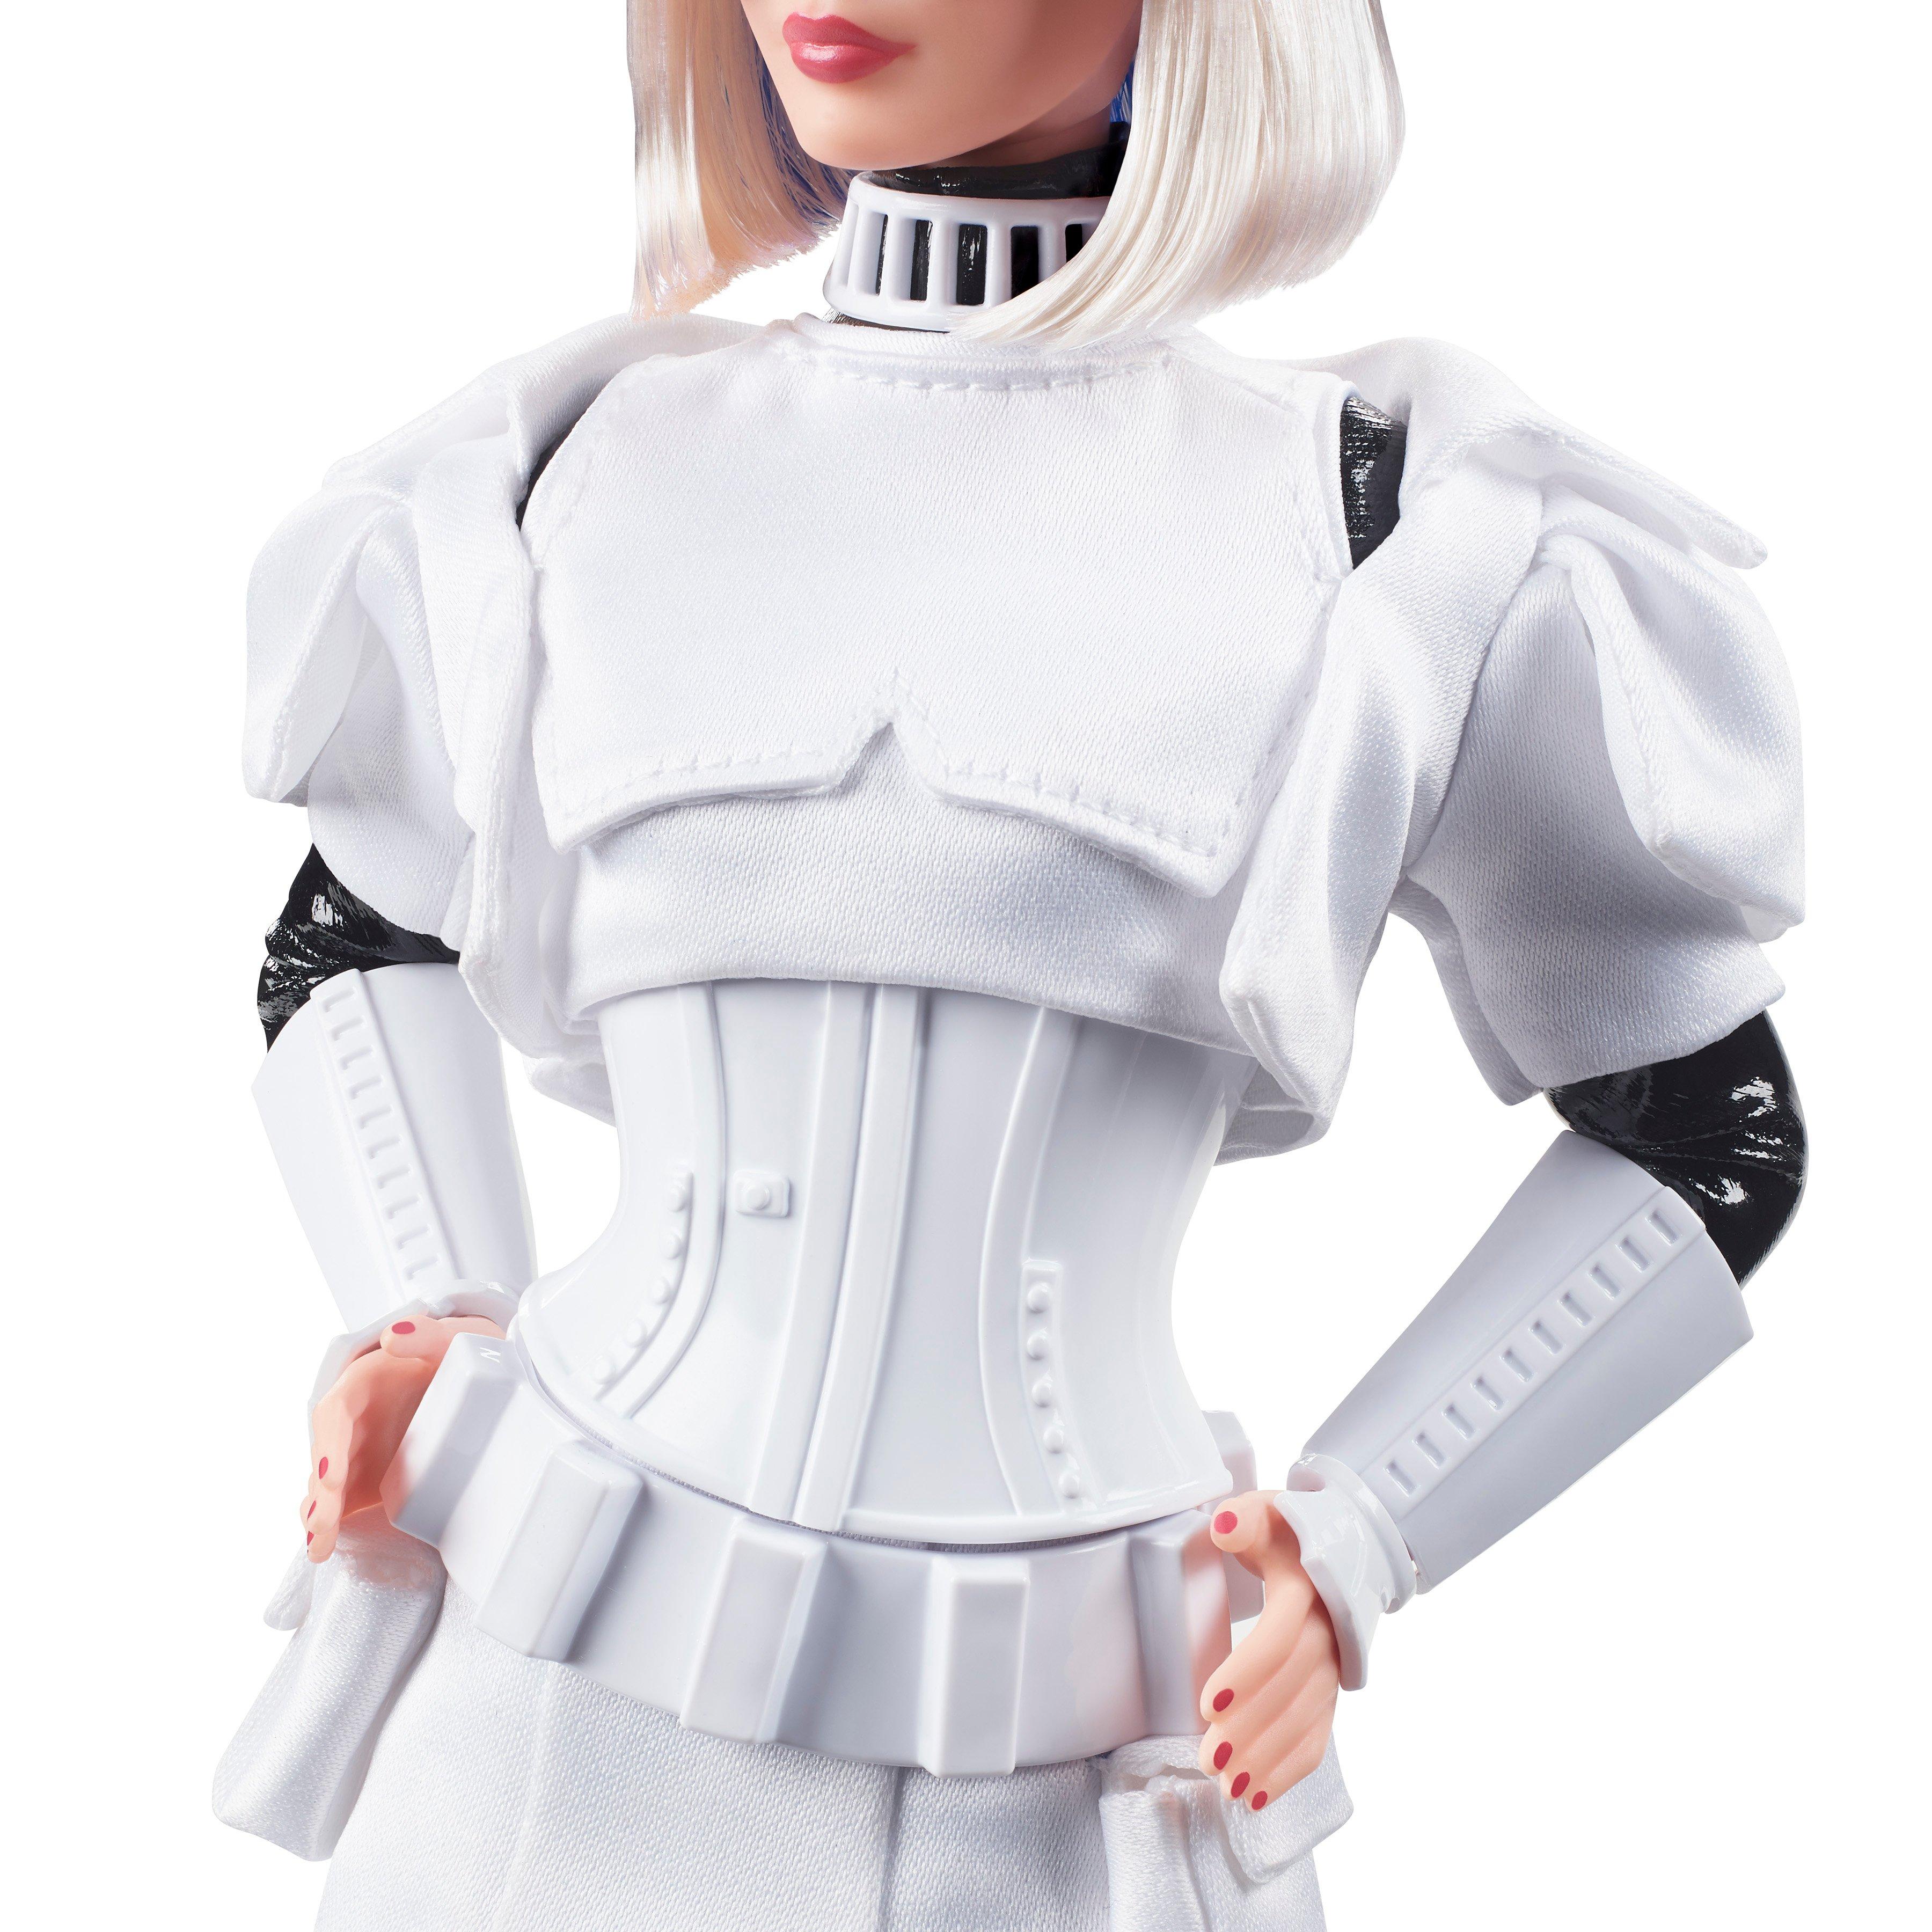 list item 2 of 11 Mattel Barie Star Wars Stormtrooper Doll